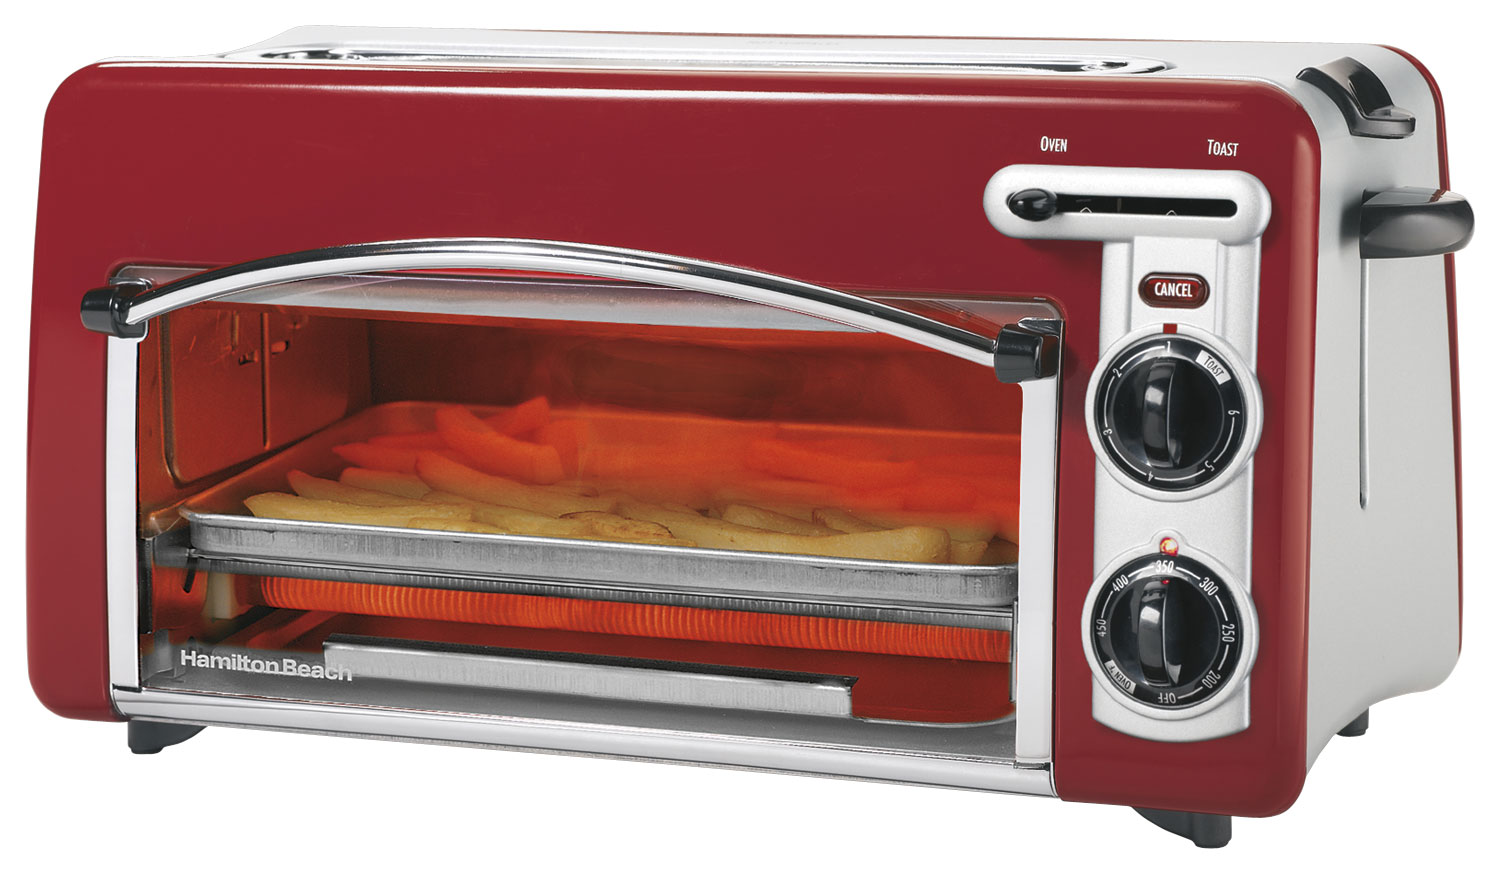 Hamilton Beach Toastation Oven with 2-Slice Toaster Combo, Ideal